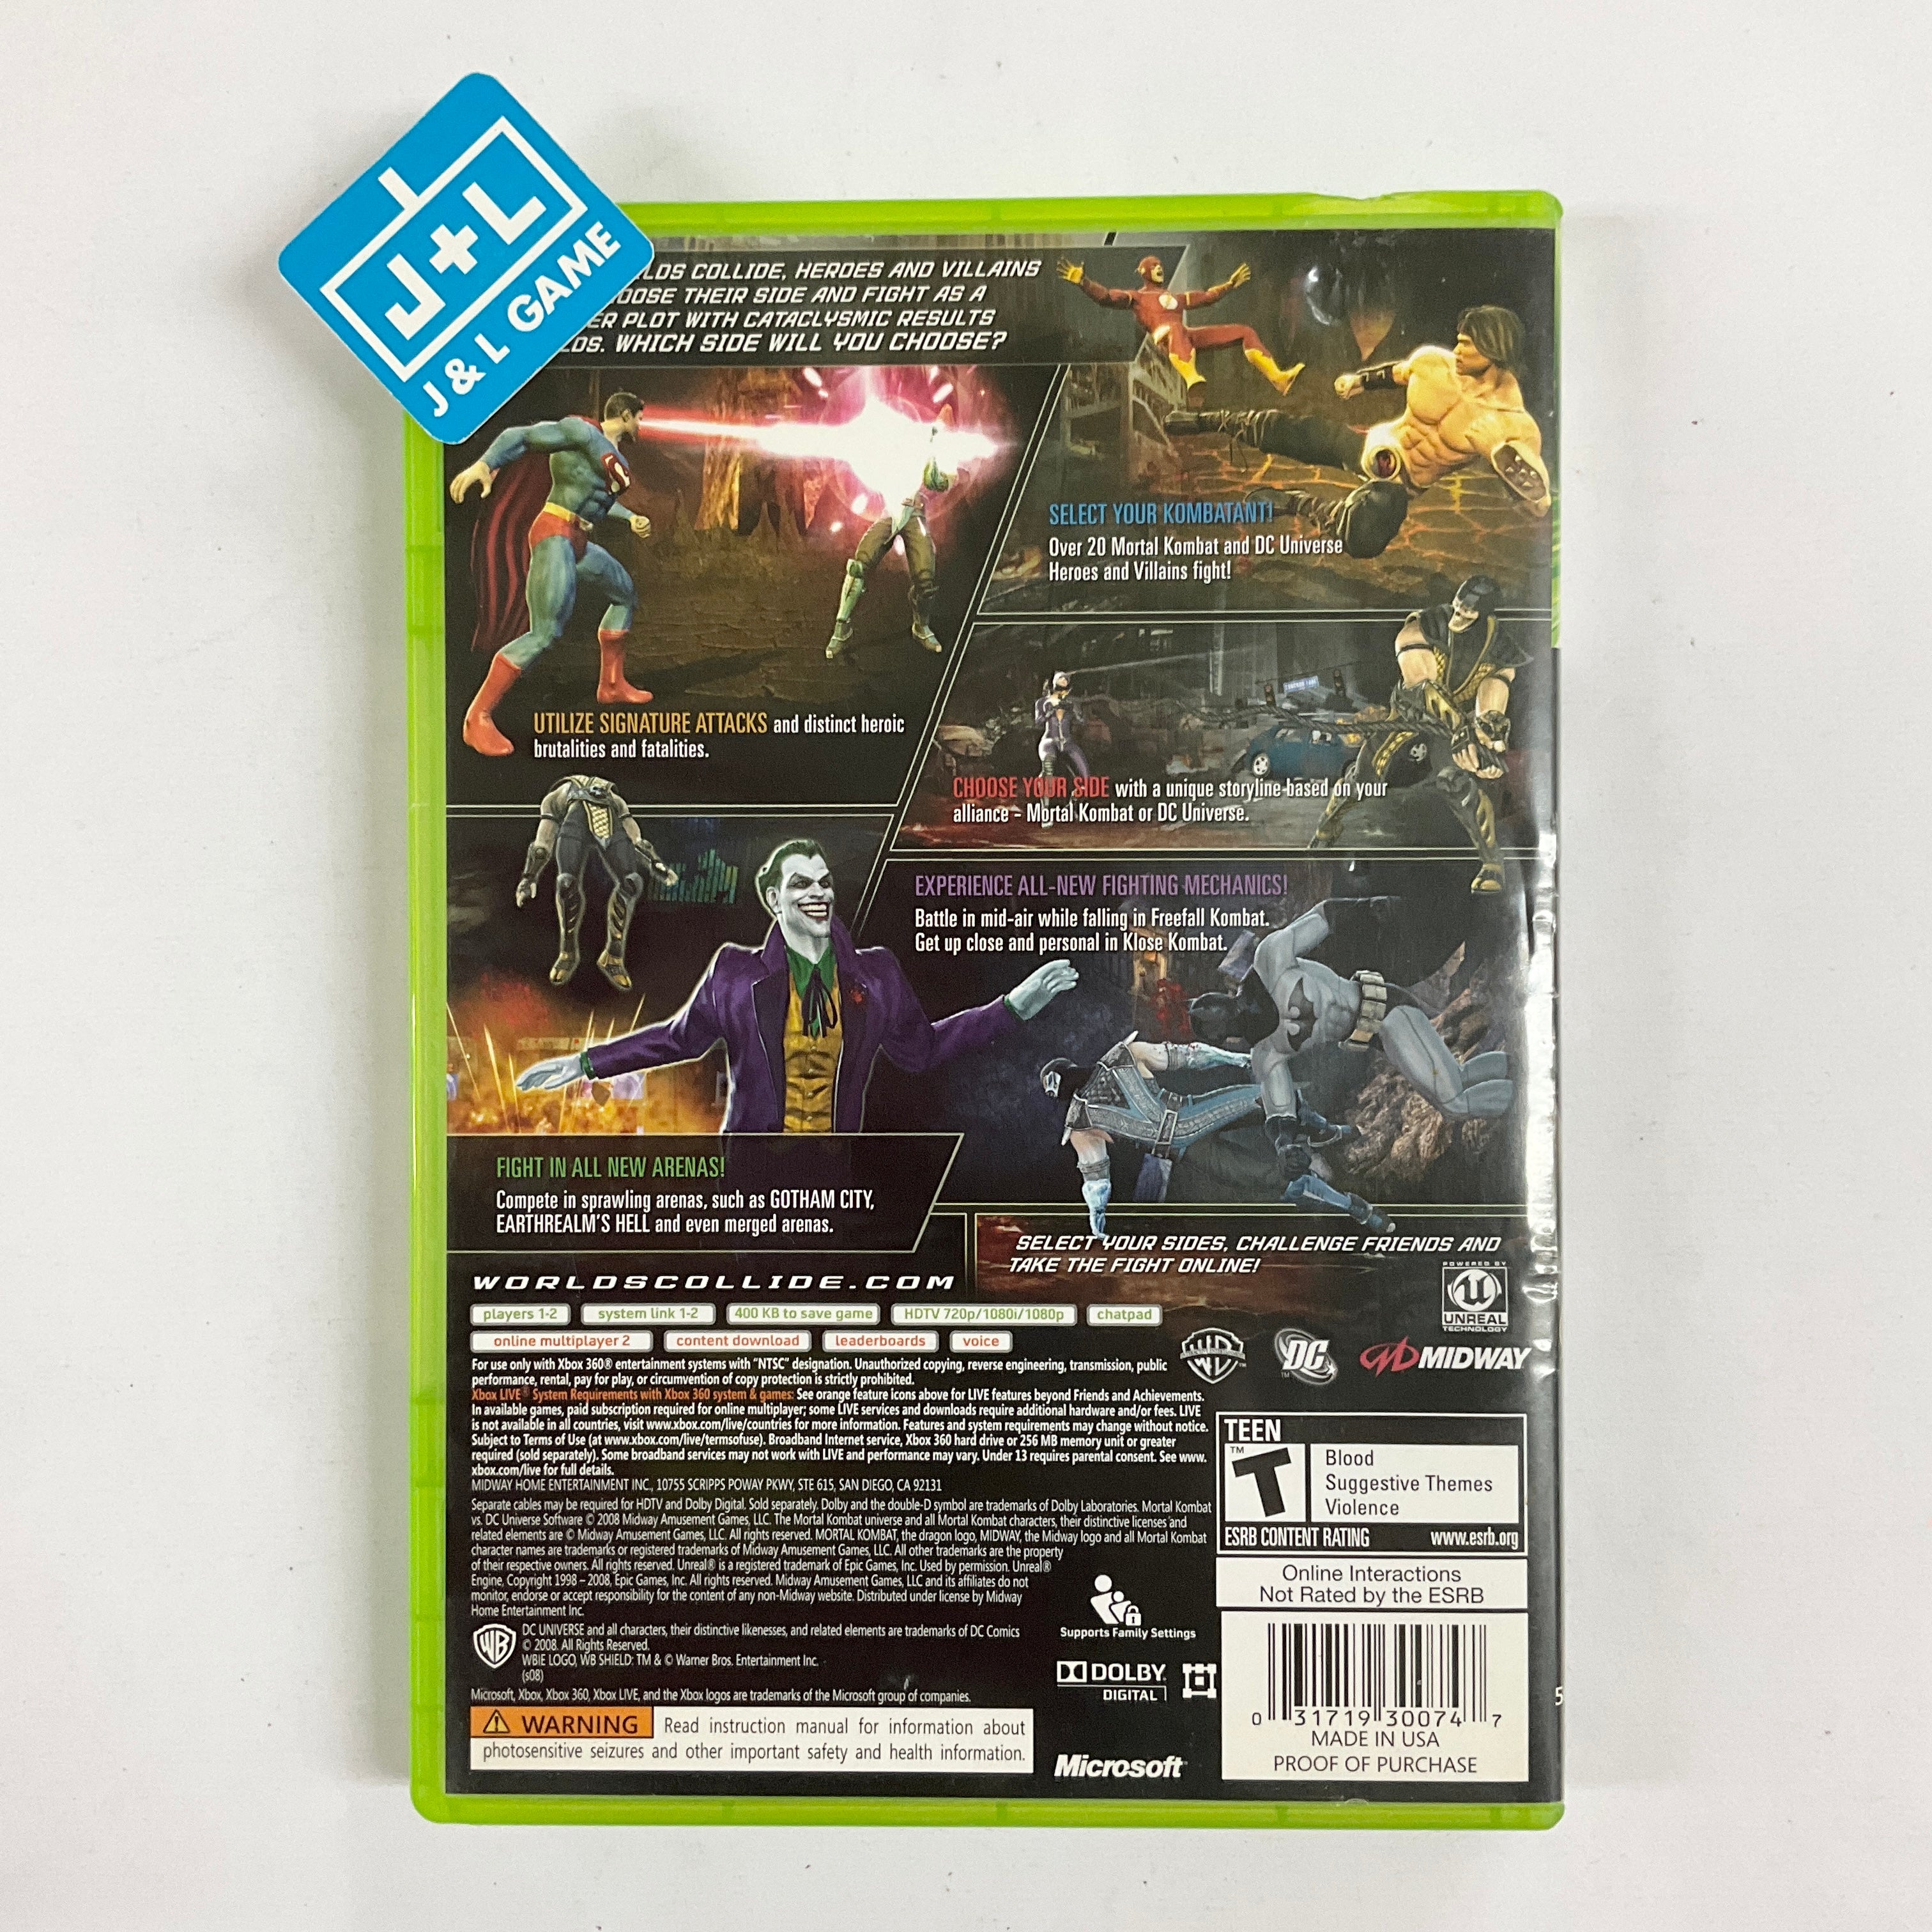 Mortal Kombat vs. DC Universe - Xbox 360 [Pre-Owned] Video Games Midway   